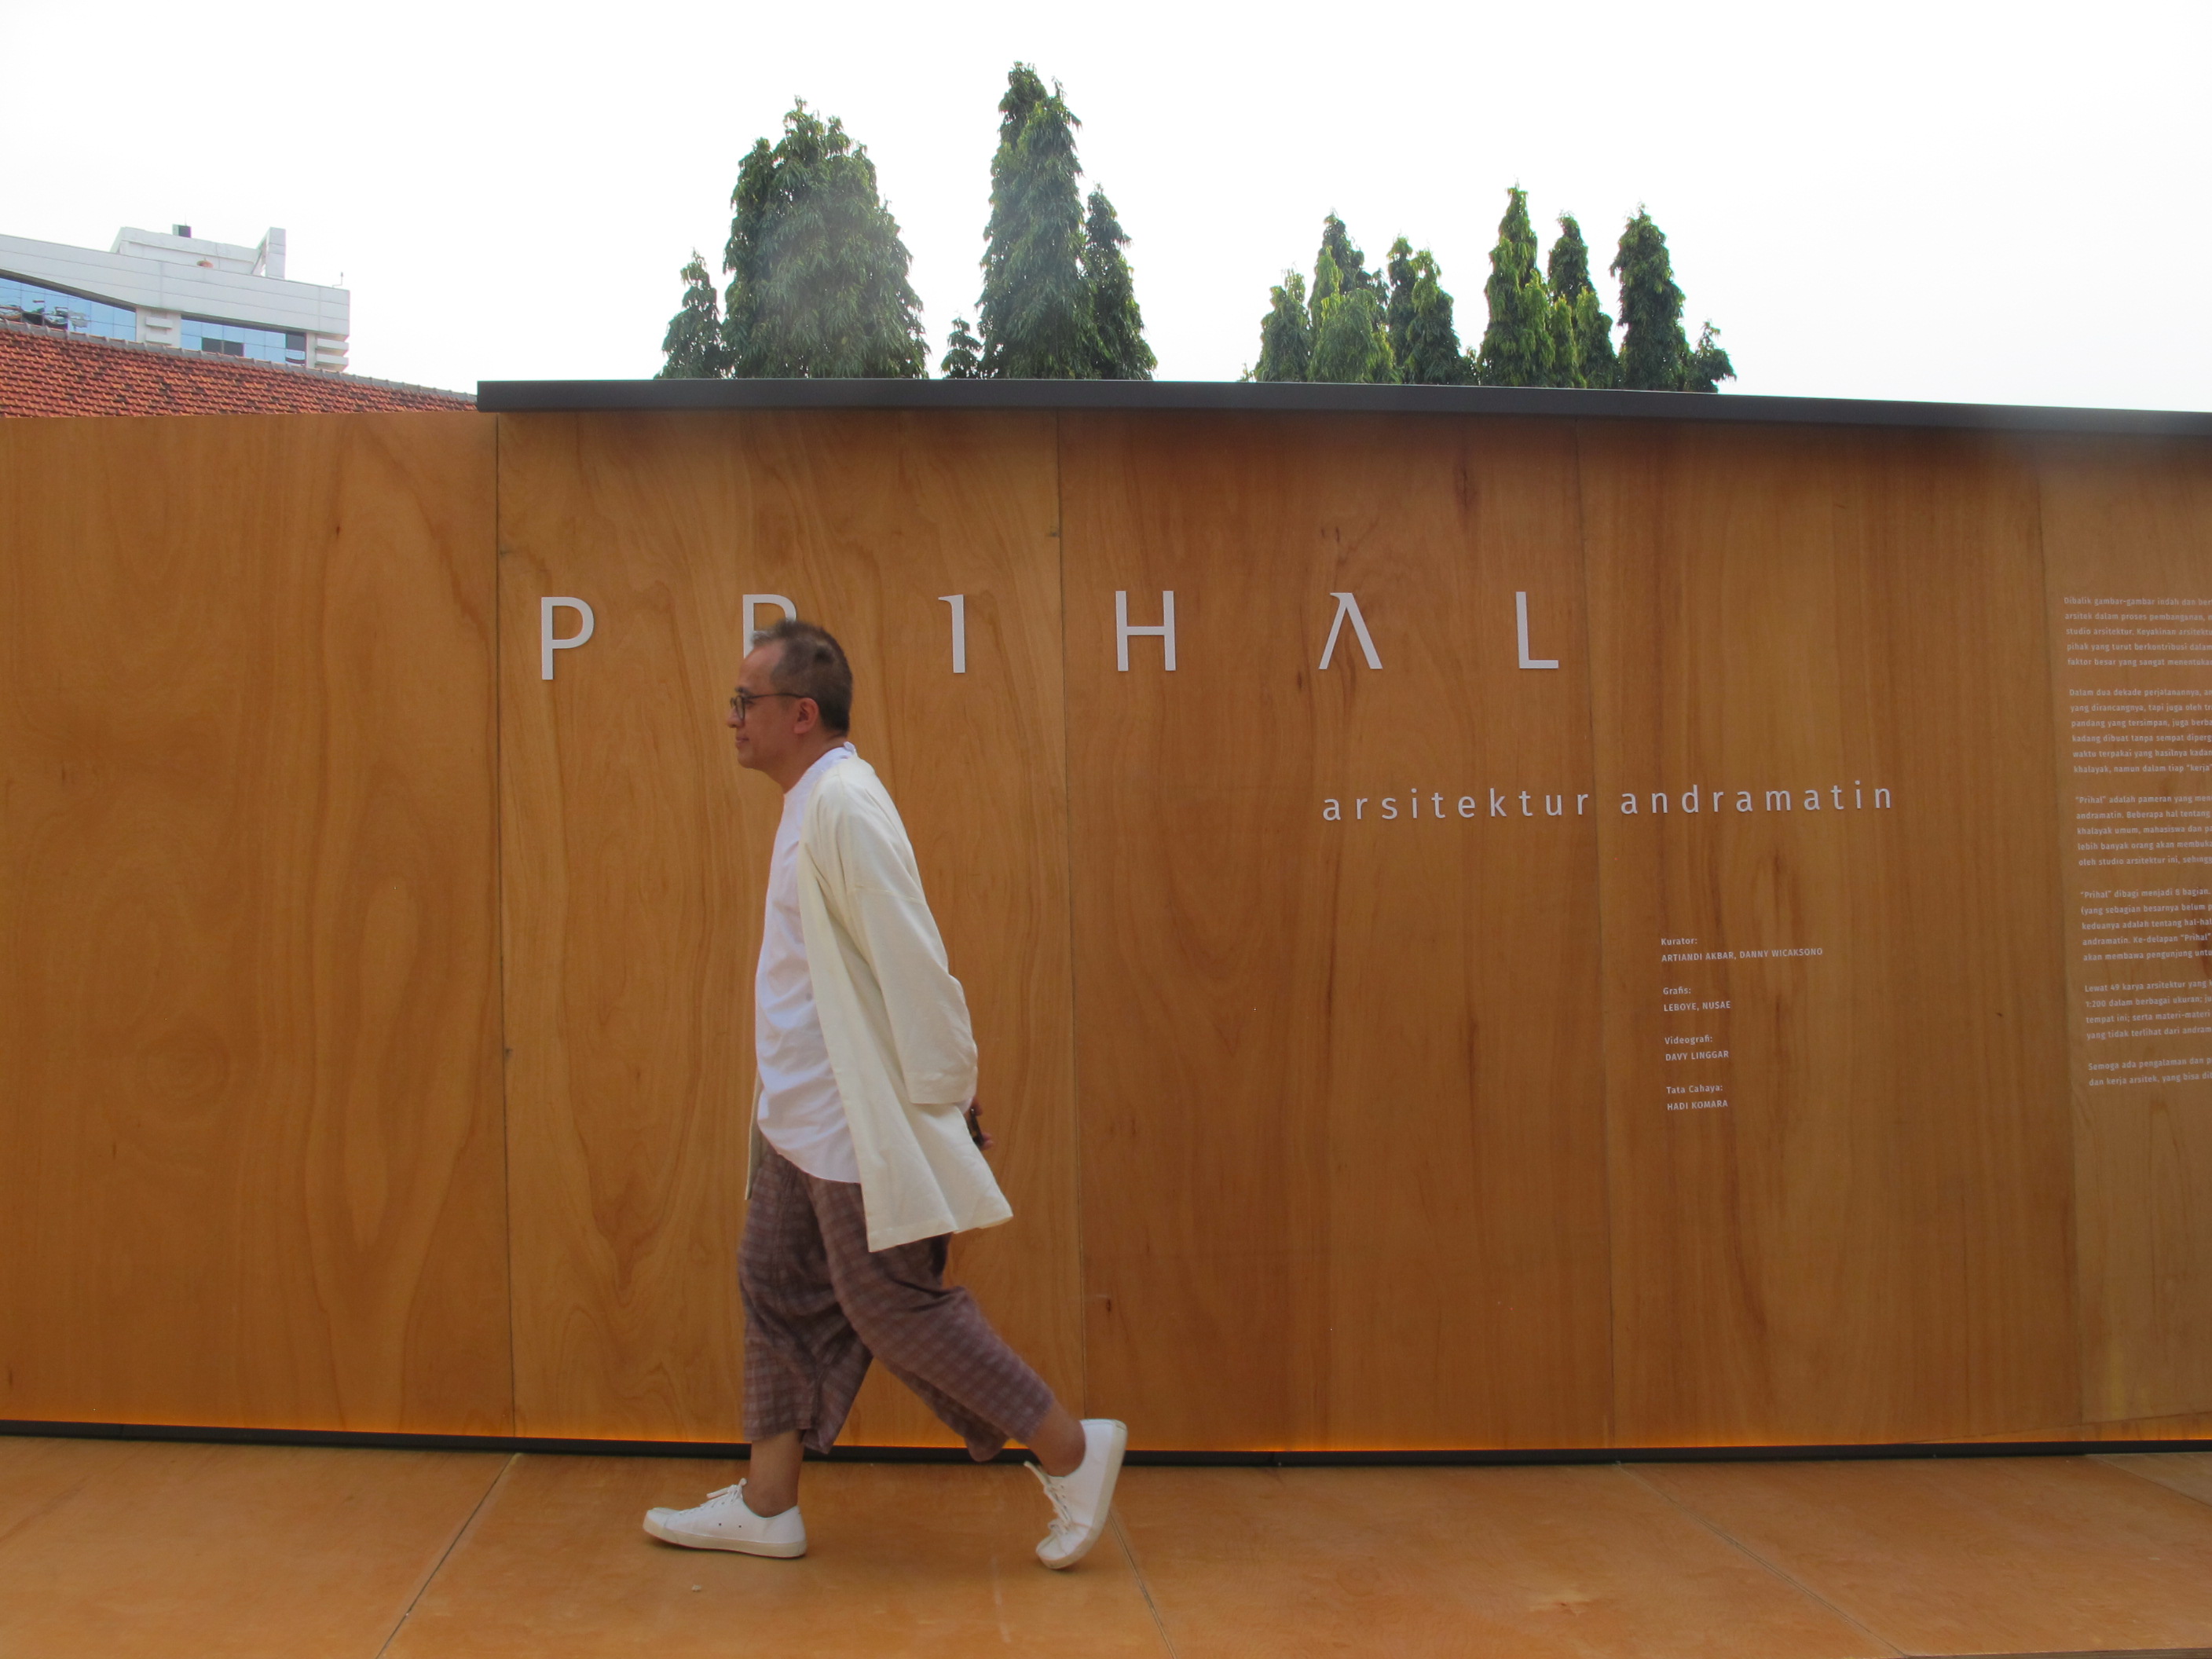 Perihal “Prihal: arsitektur andramatin”